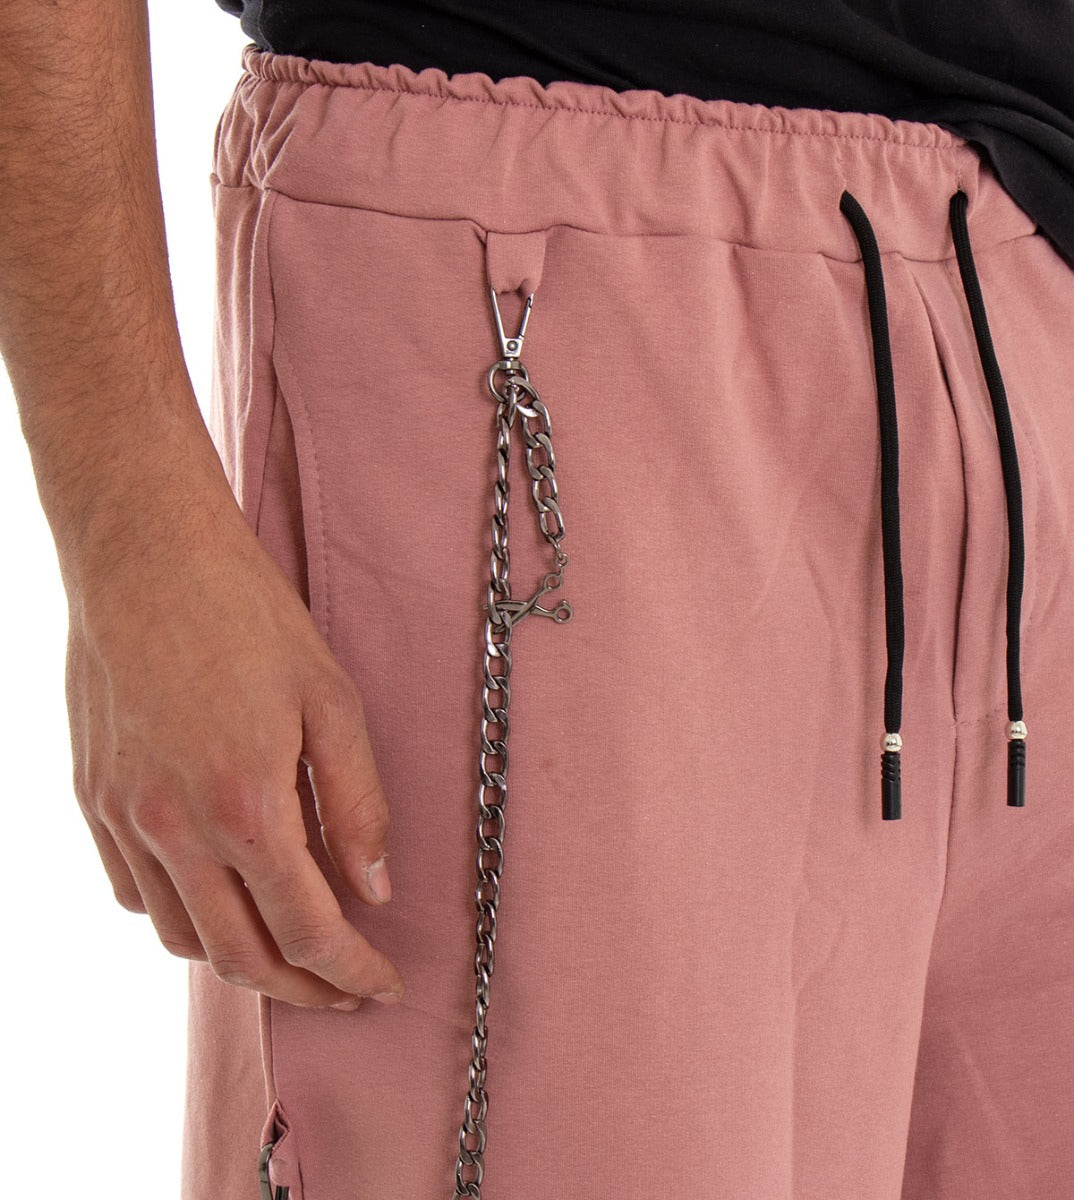 Bermuda Pantaloncino Uomo Corto Over Tinta Unita Rosa Cotone GIOSAL-PC1490A